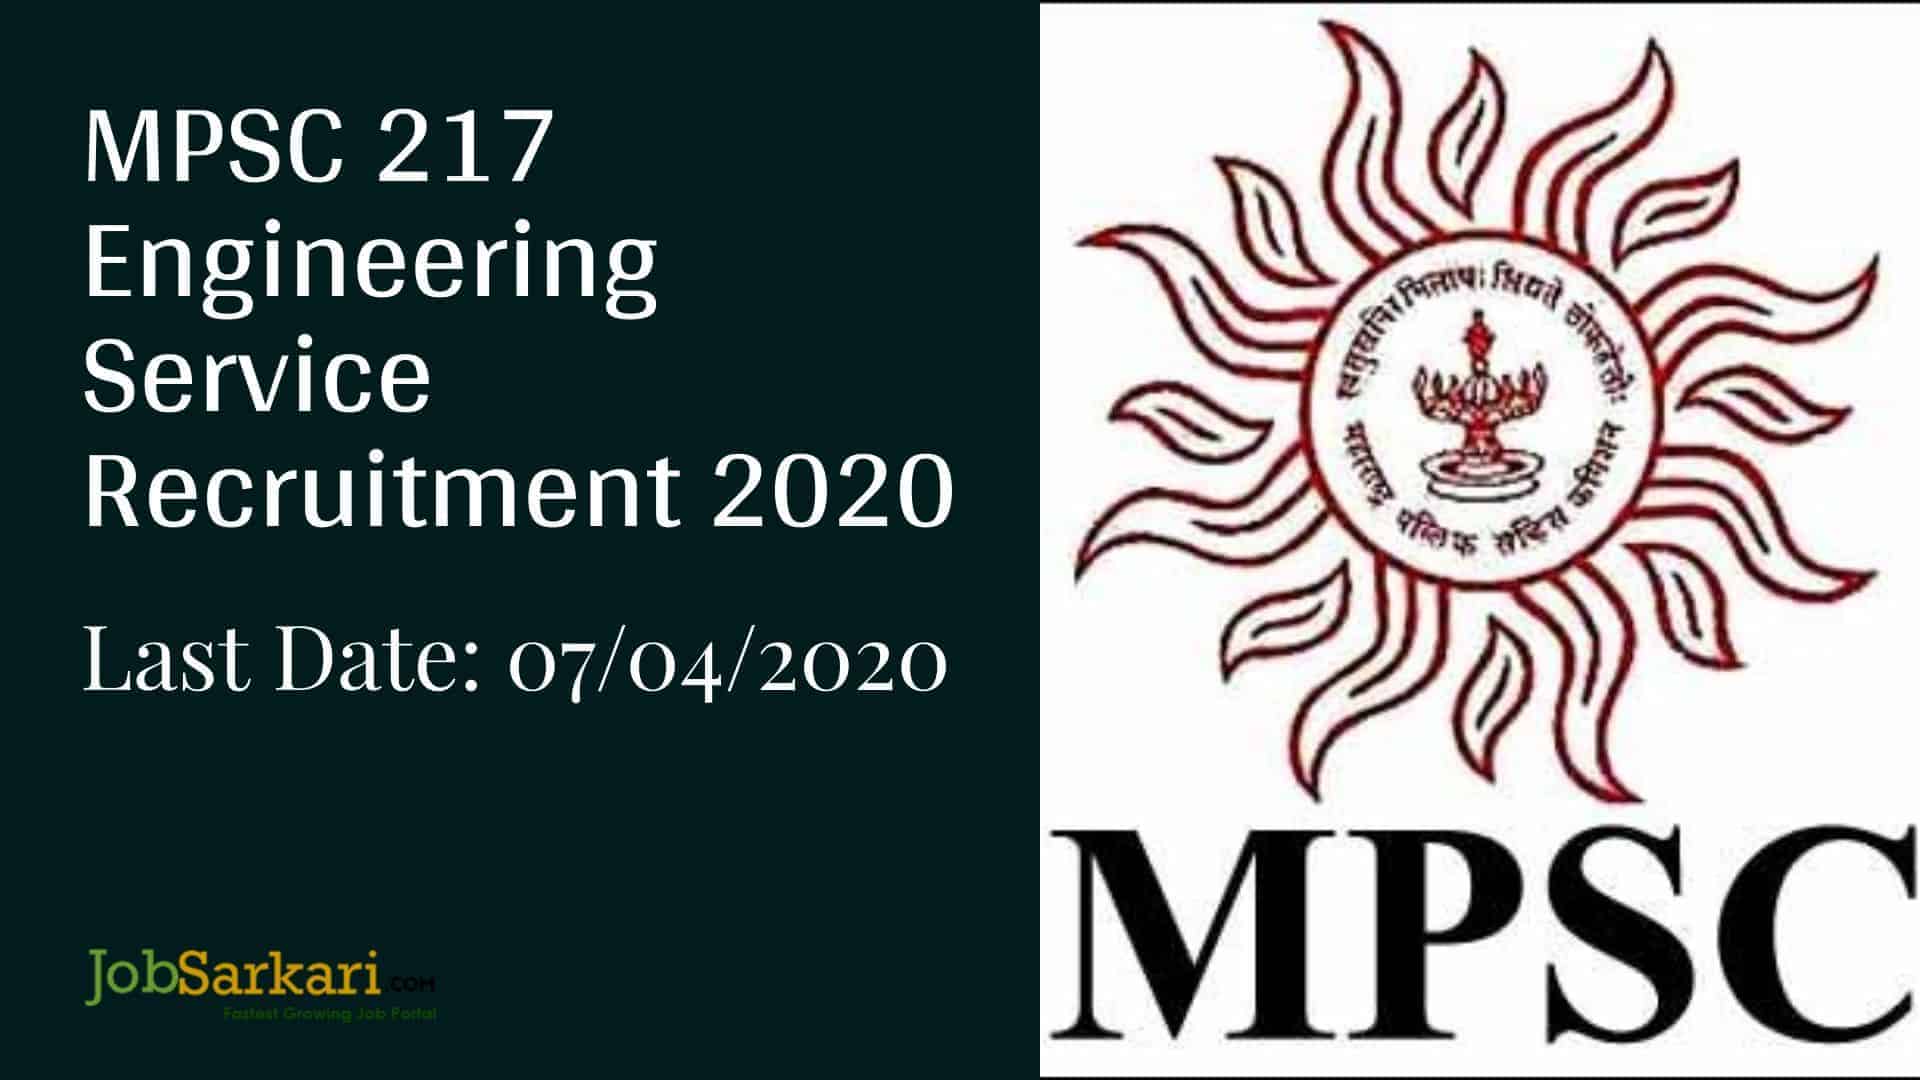 MPSC 217 Engineering Service Recruitment 2020